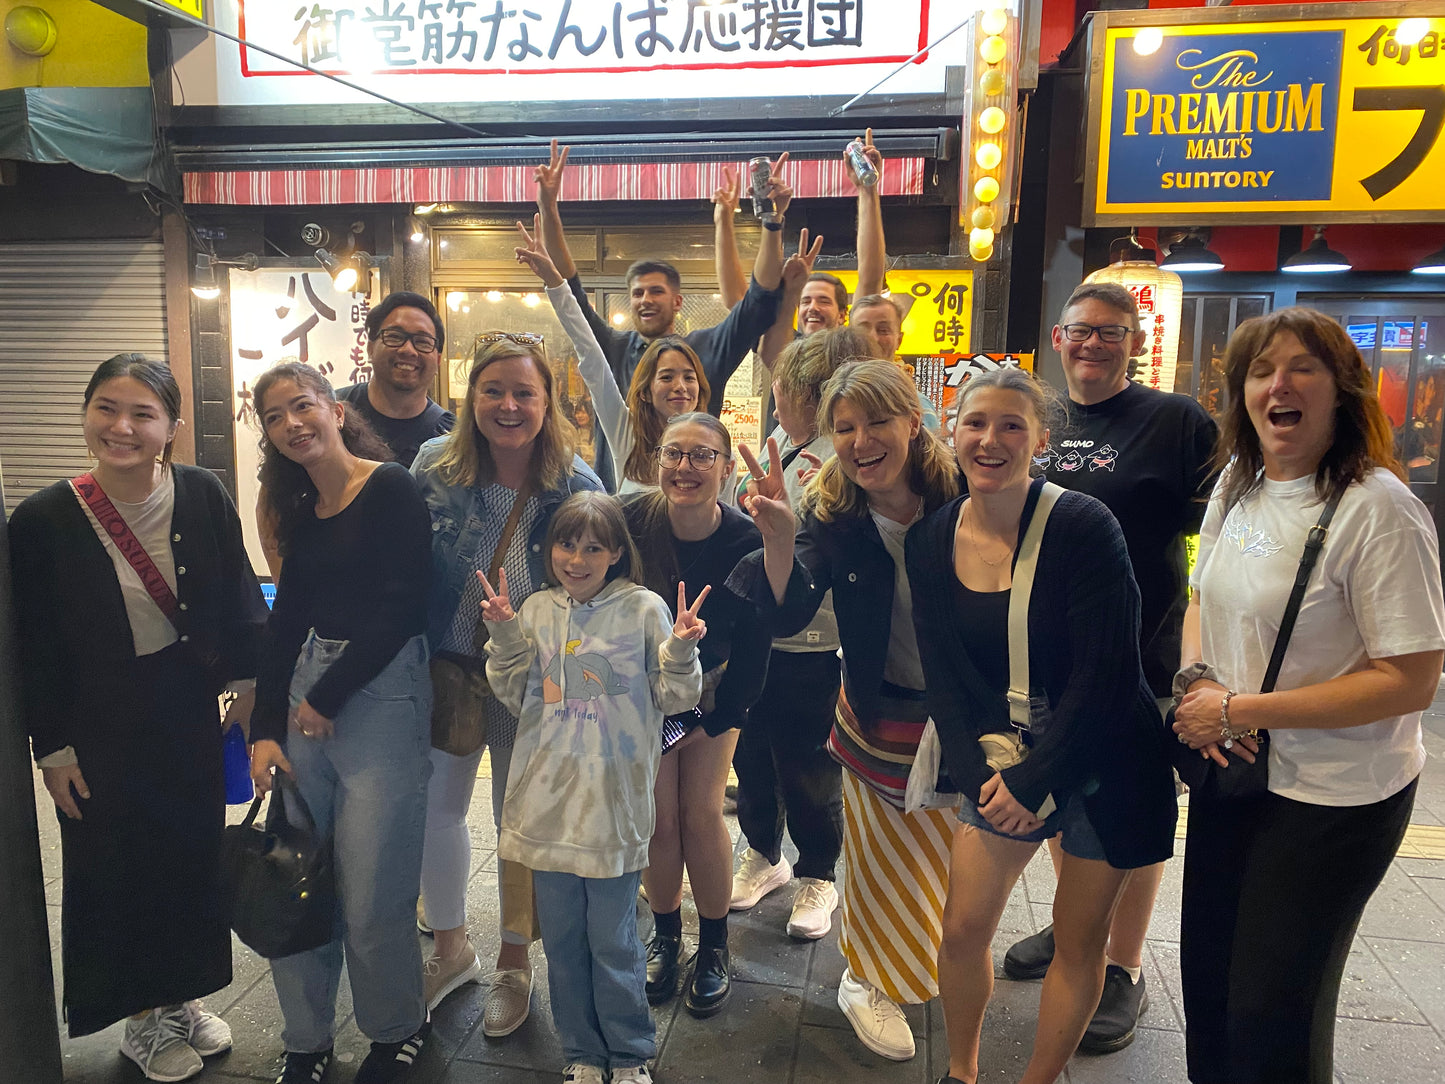 Osaka street food evening tour: Osaka's soul food delights